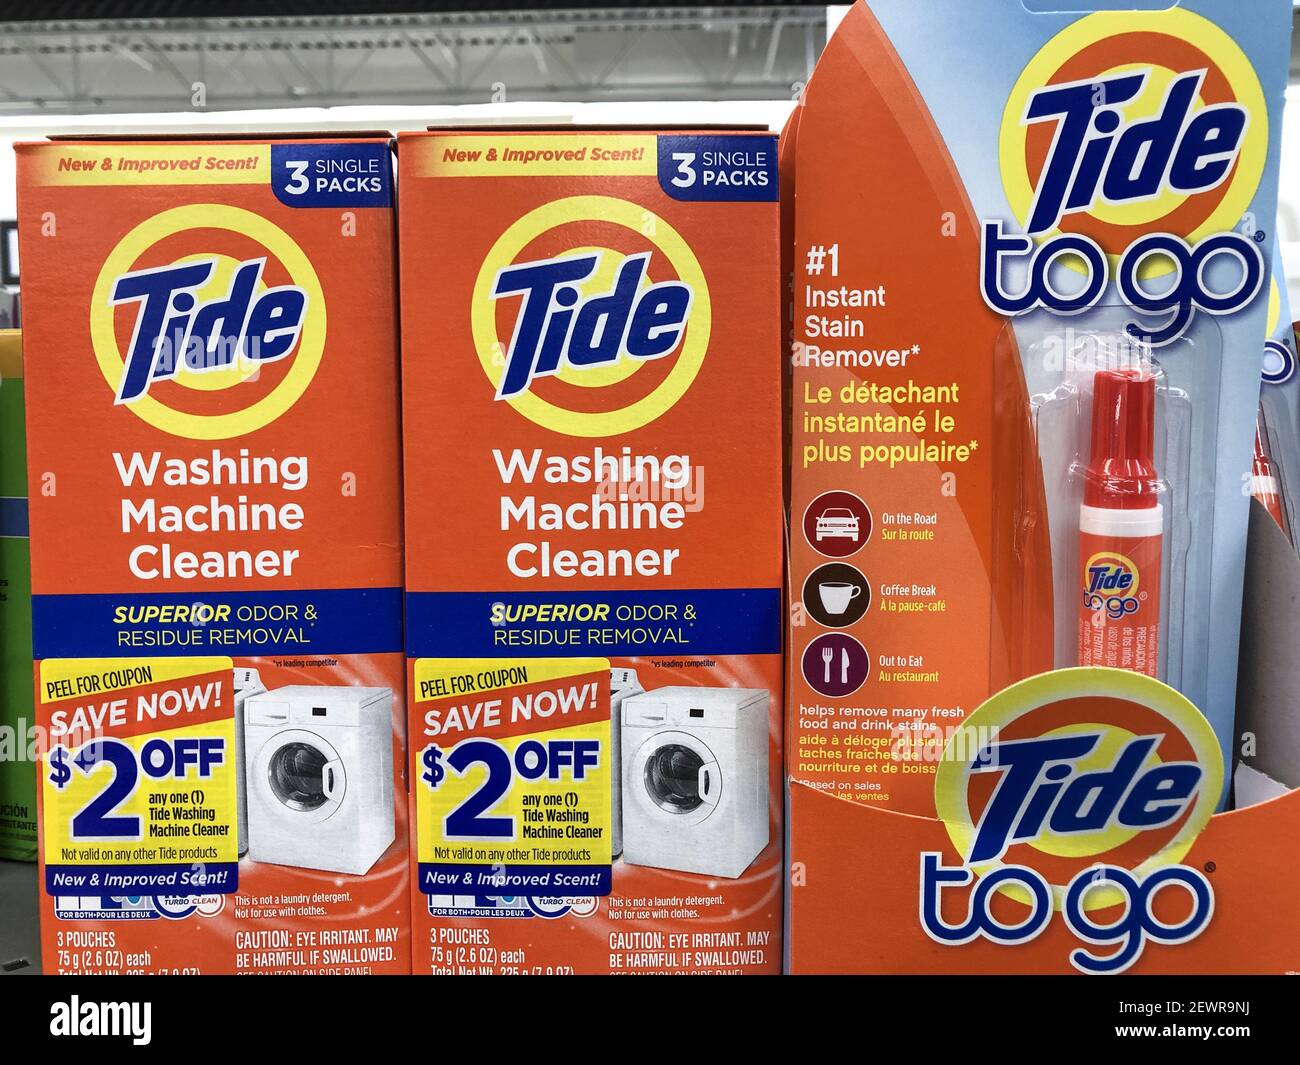 Tide Washing Machine Cleaner 4 single Packs